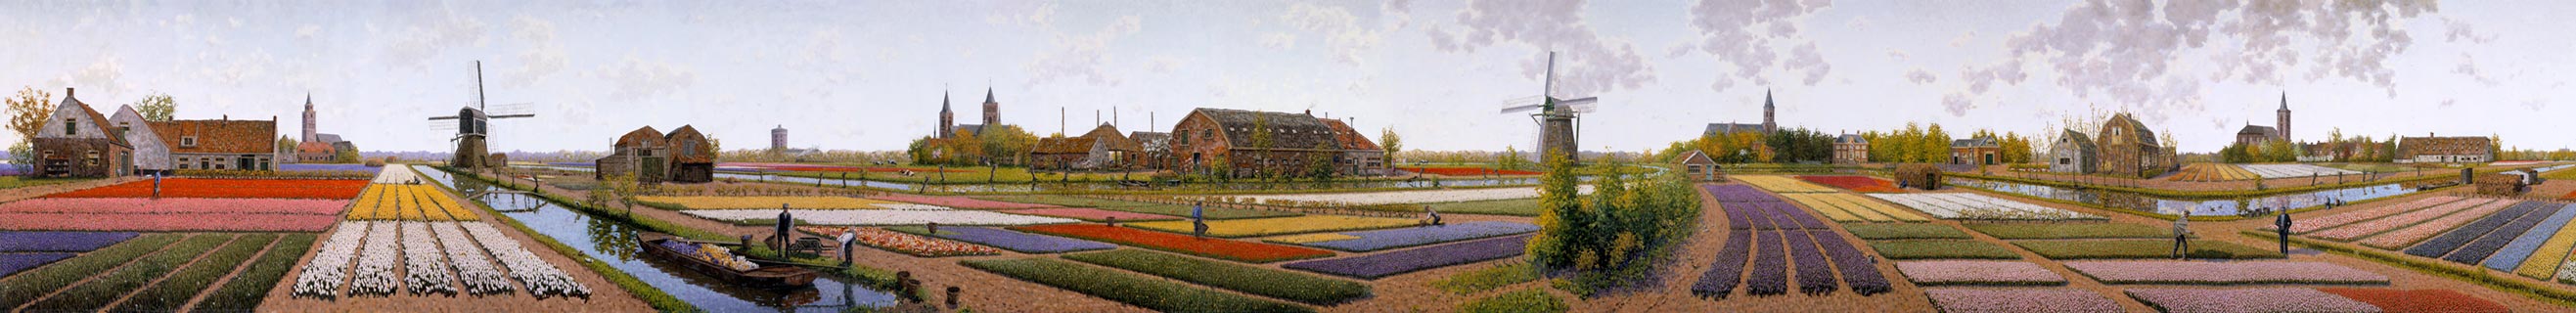 The Van den Ende Panorama